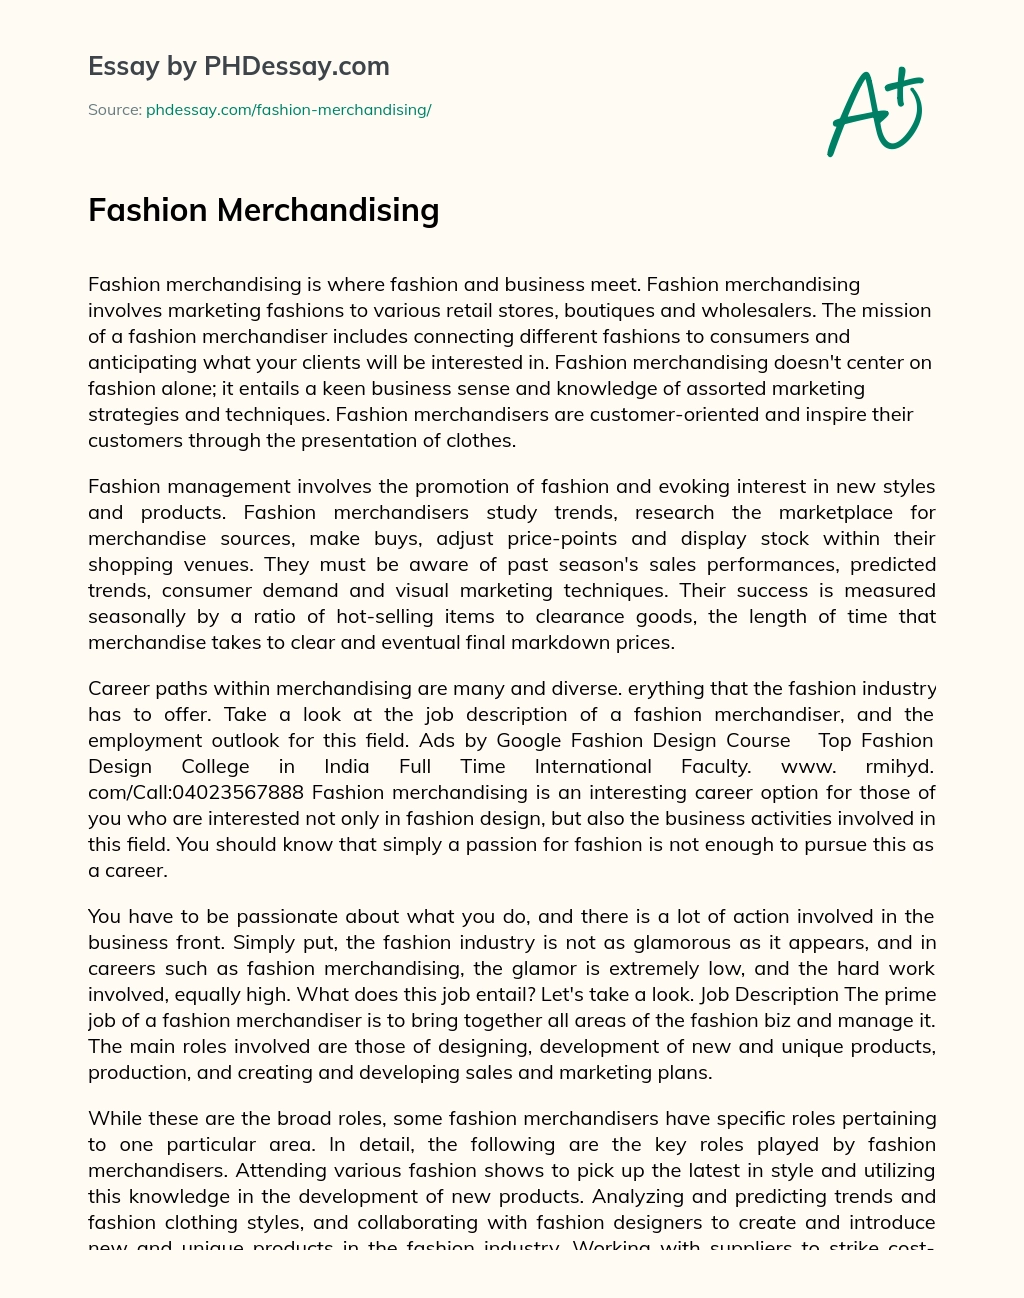 Fashion Merchandising essay